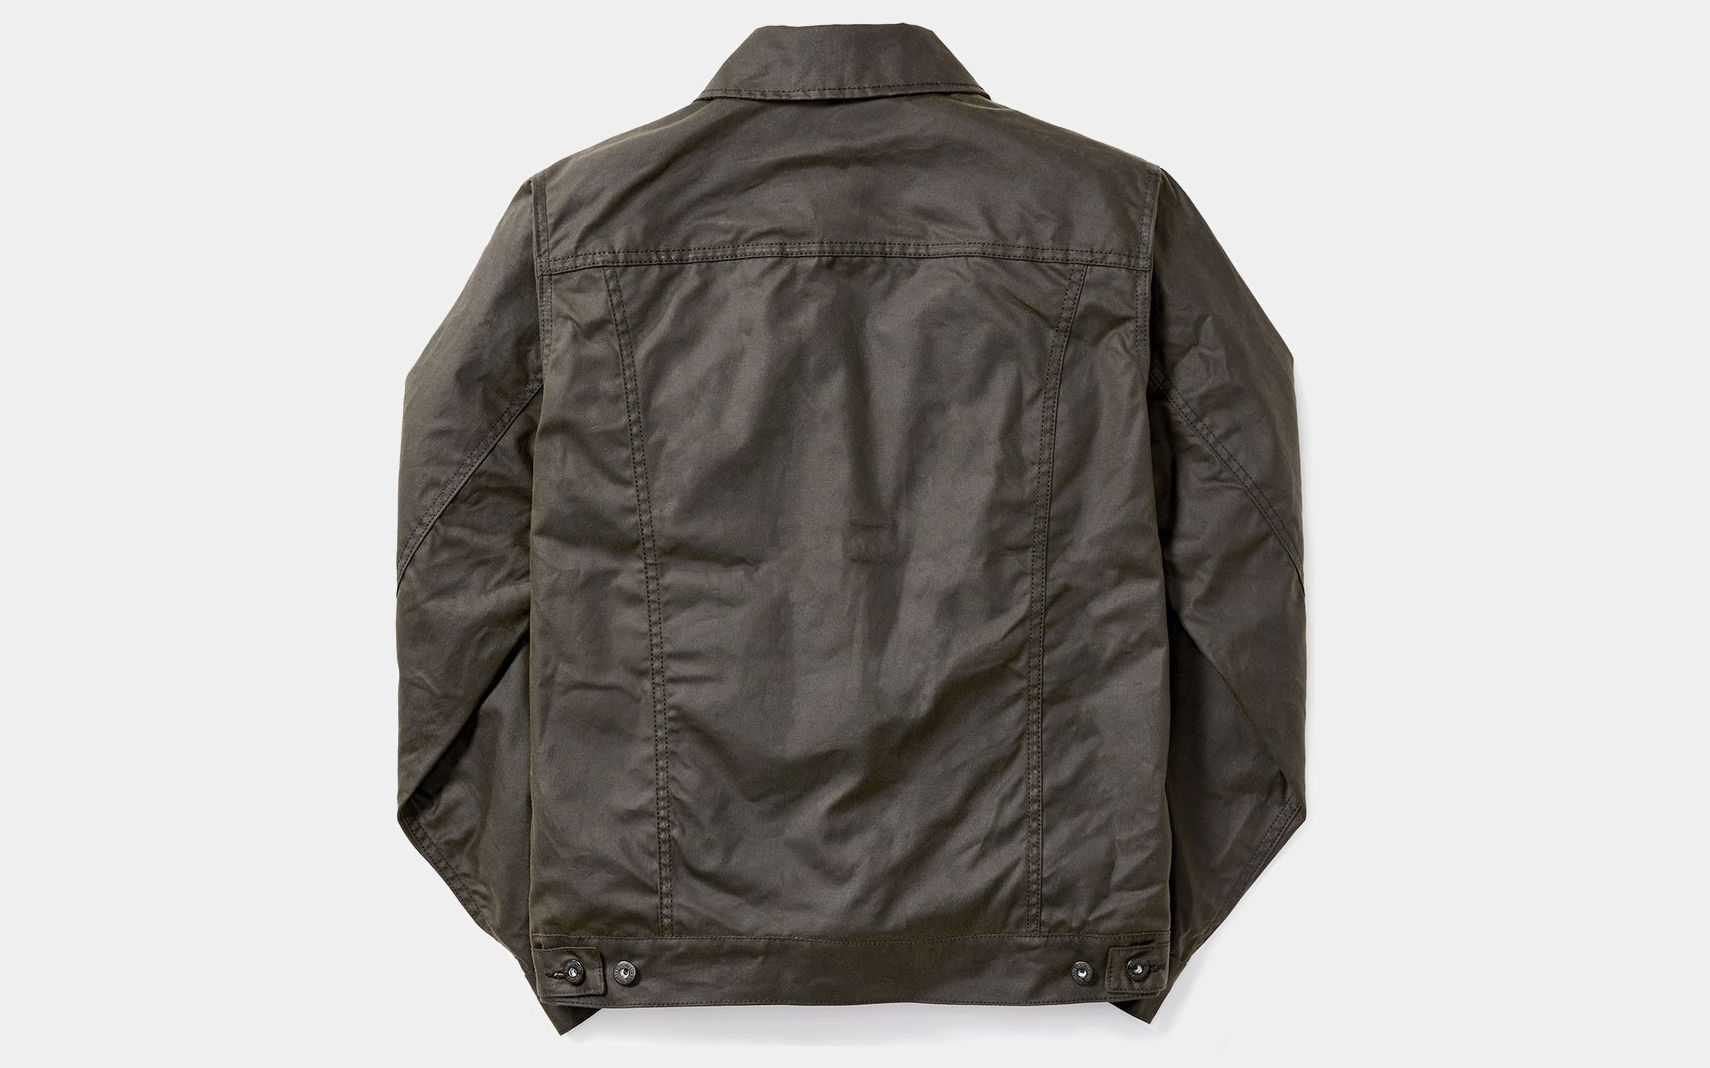 Filson Leather Short Cruiser Jacket